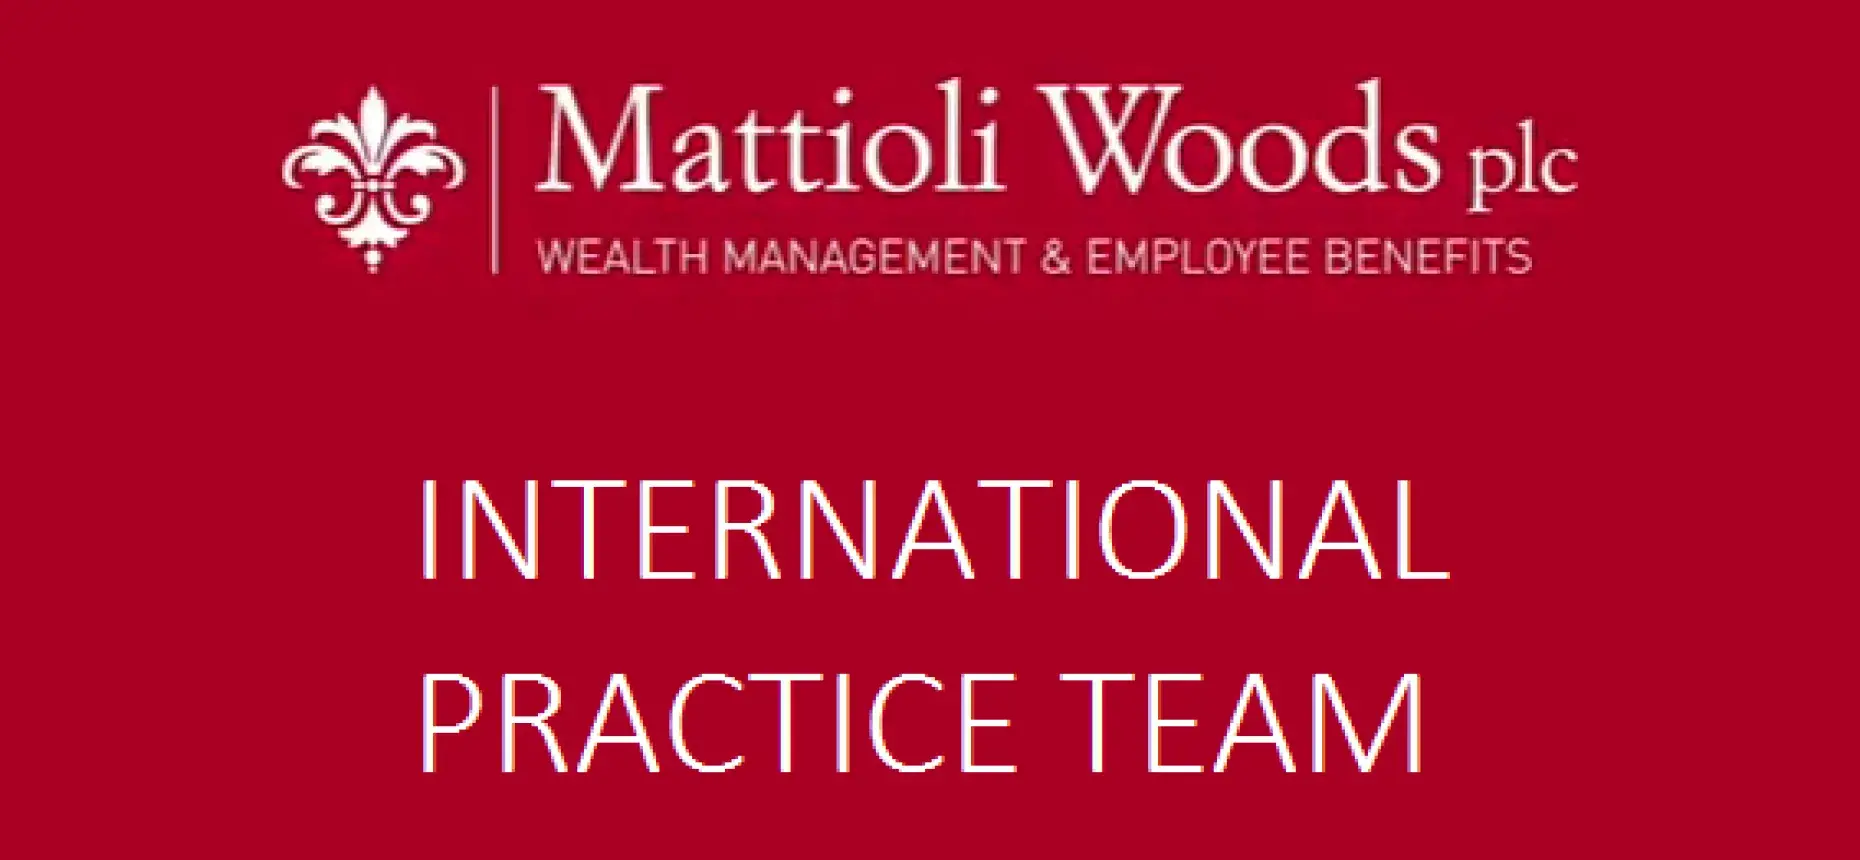 mattioli woods international practice team